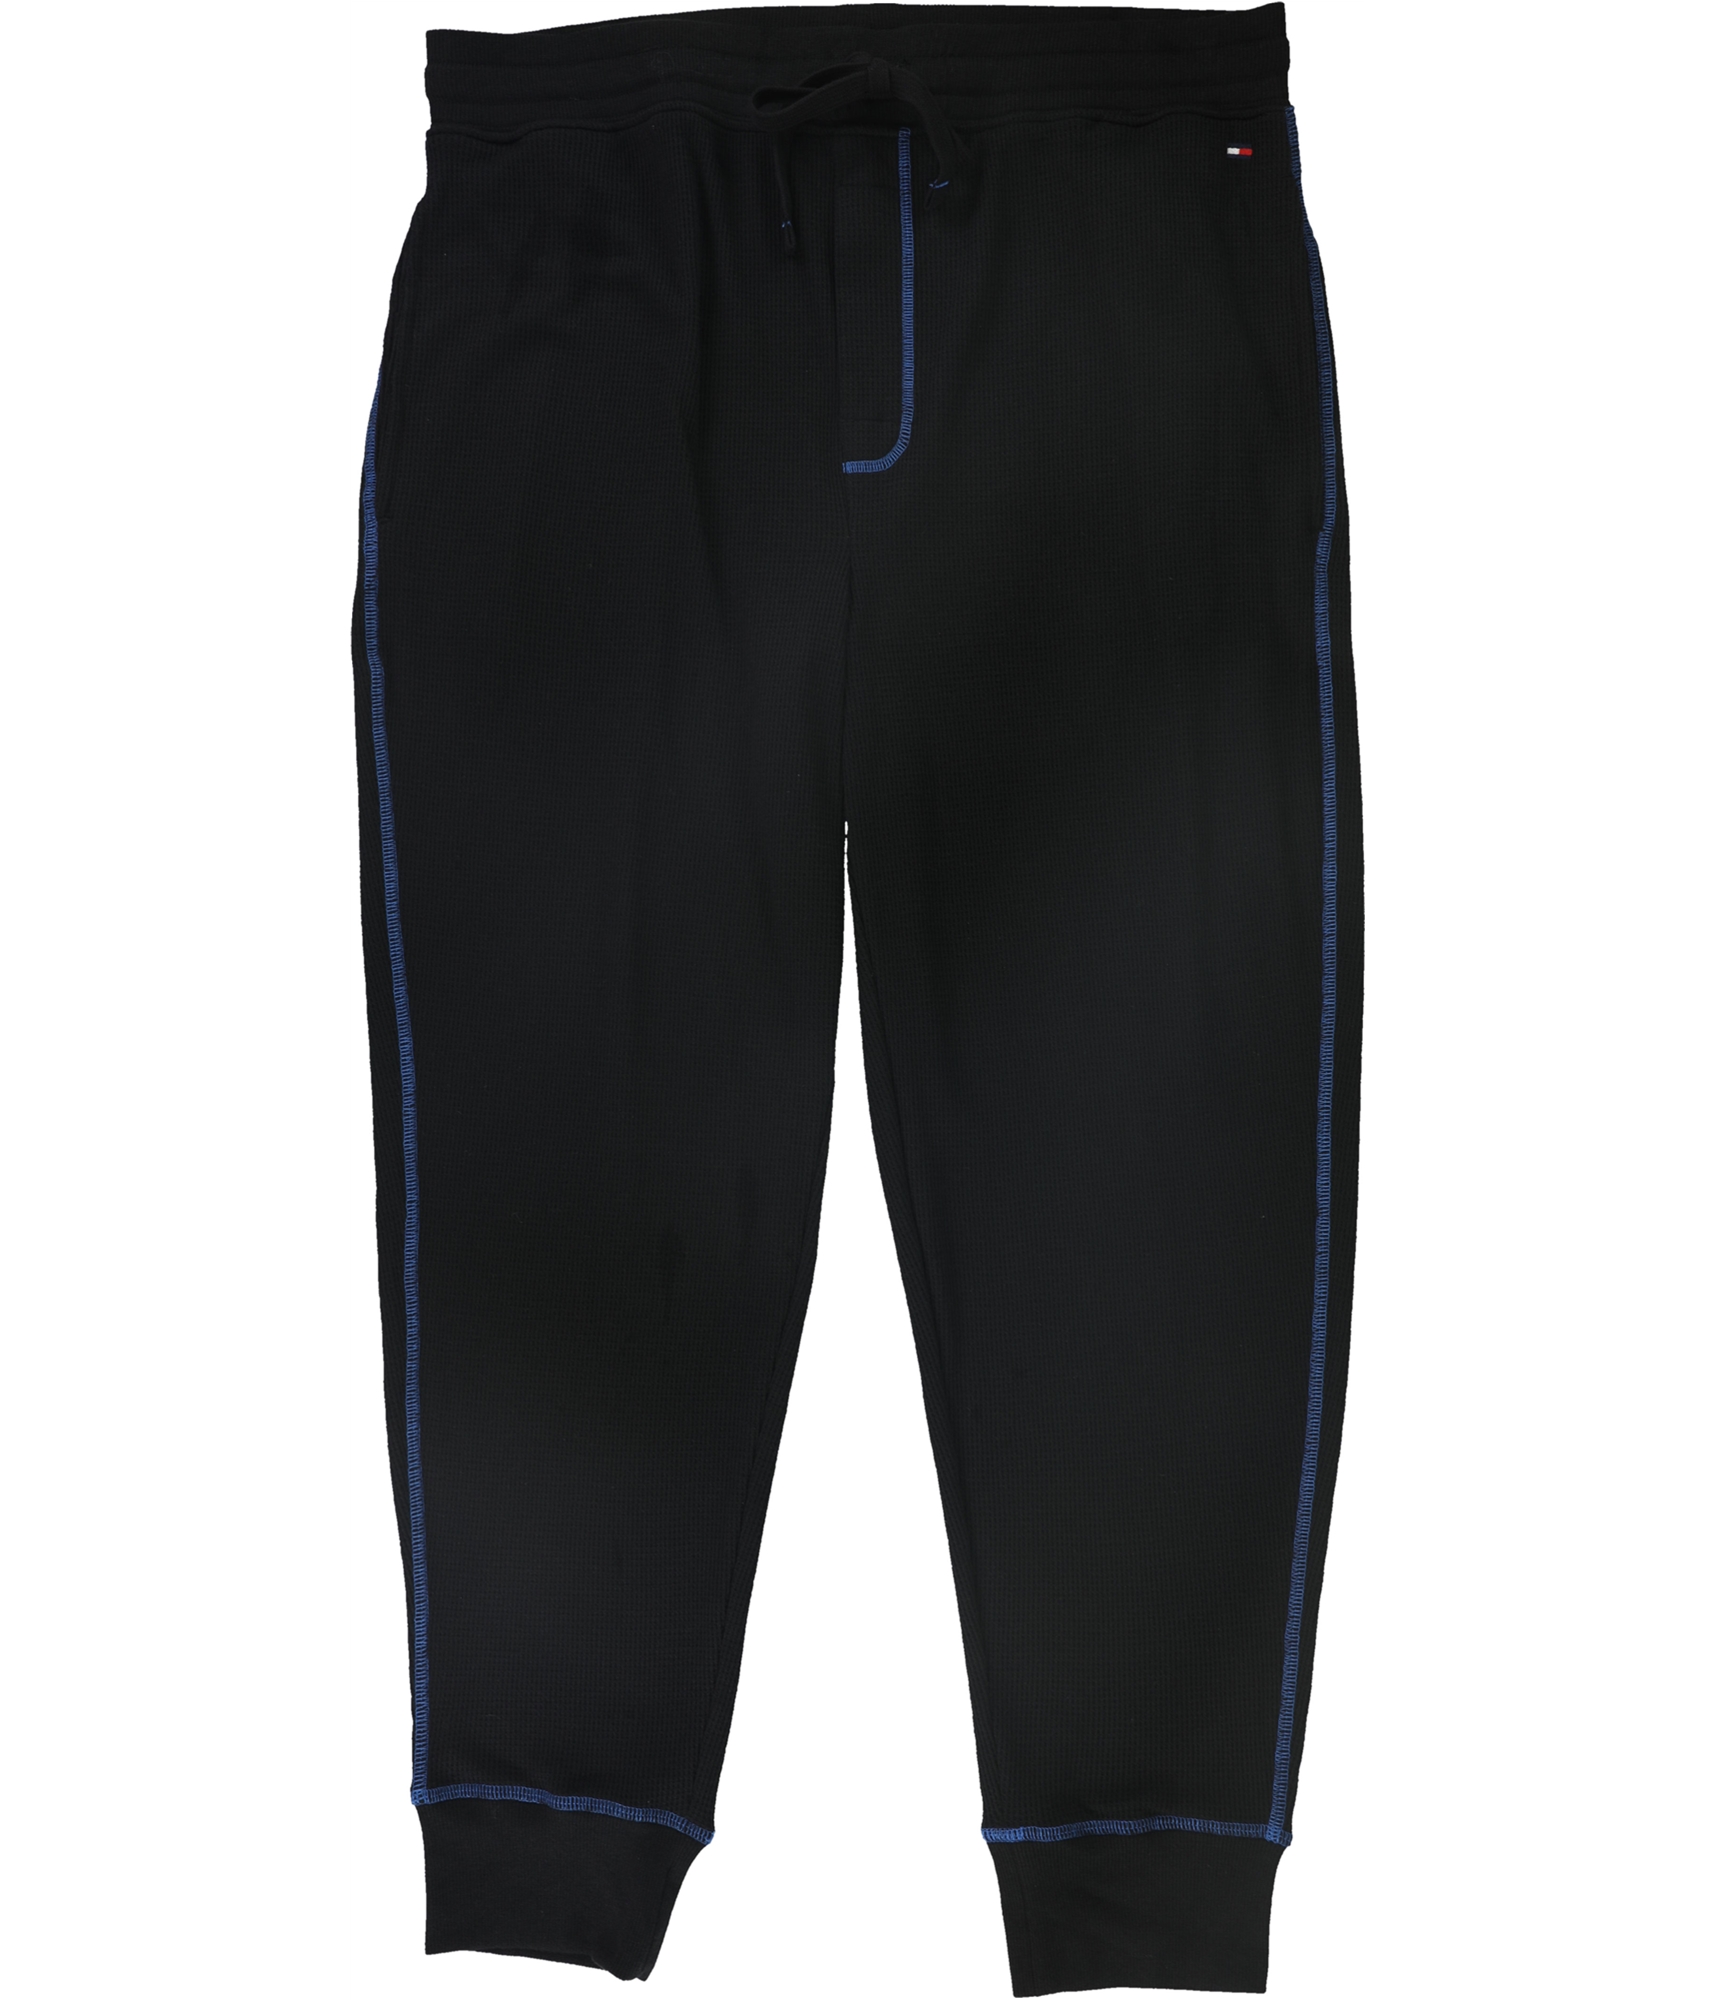 Tommy Hilfiger Mens Thermal Pajama Jogger Pants, Black, Large | eBay